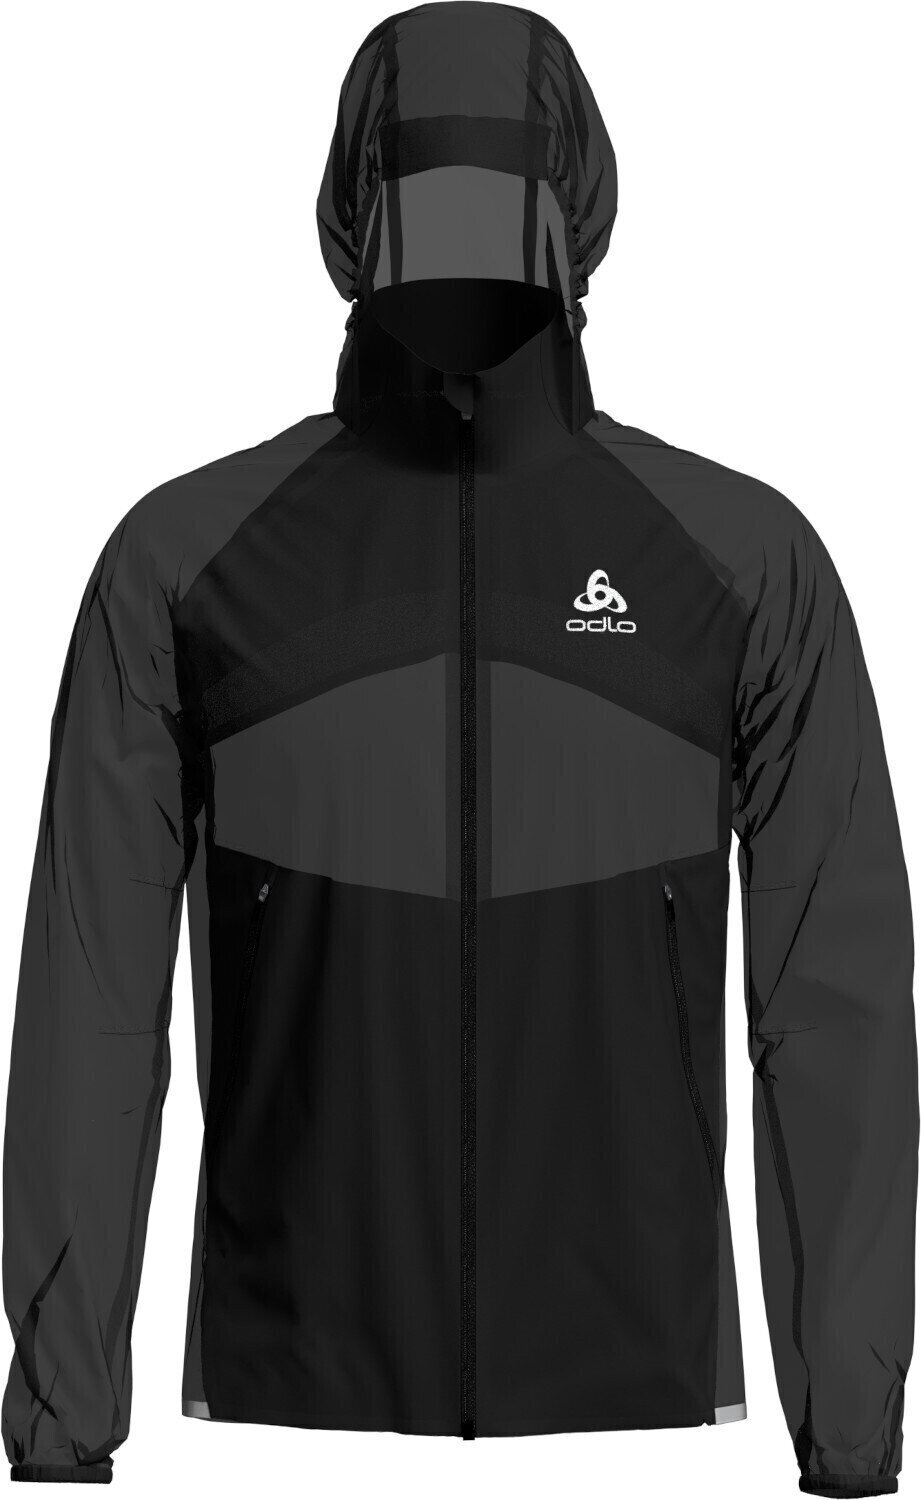 Running jacket Odlo Zeroweight Dual Dry Water Resistant Jacket Black S Running jacket